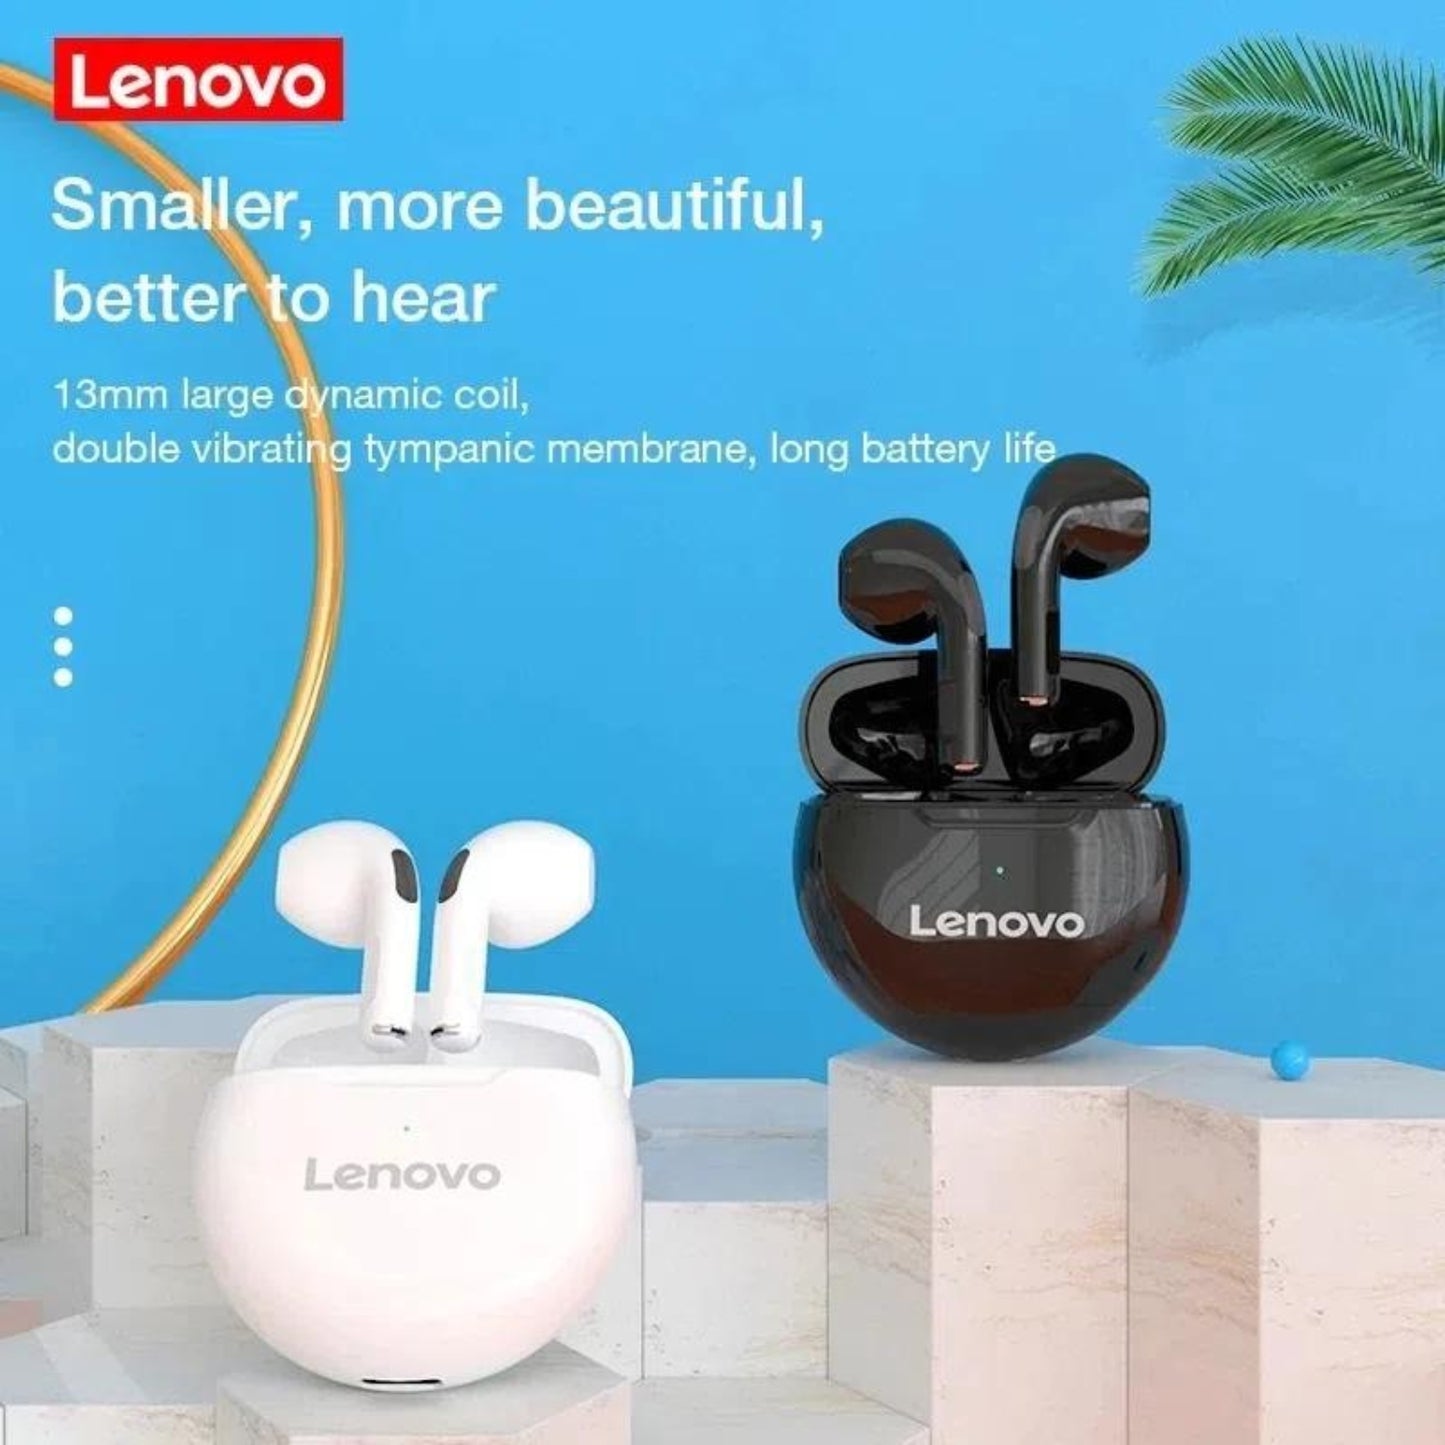 Audifonos Lenovo HT38 + Lentes de sol + Audifonos Blacksheep Smoke de regalo